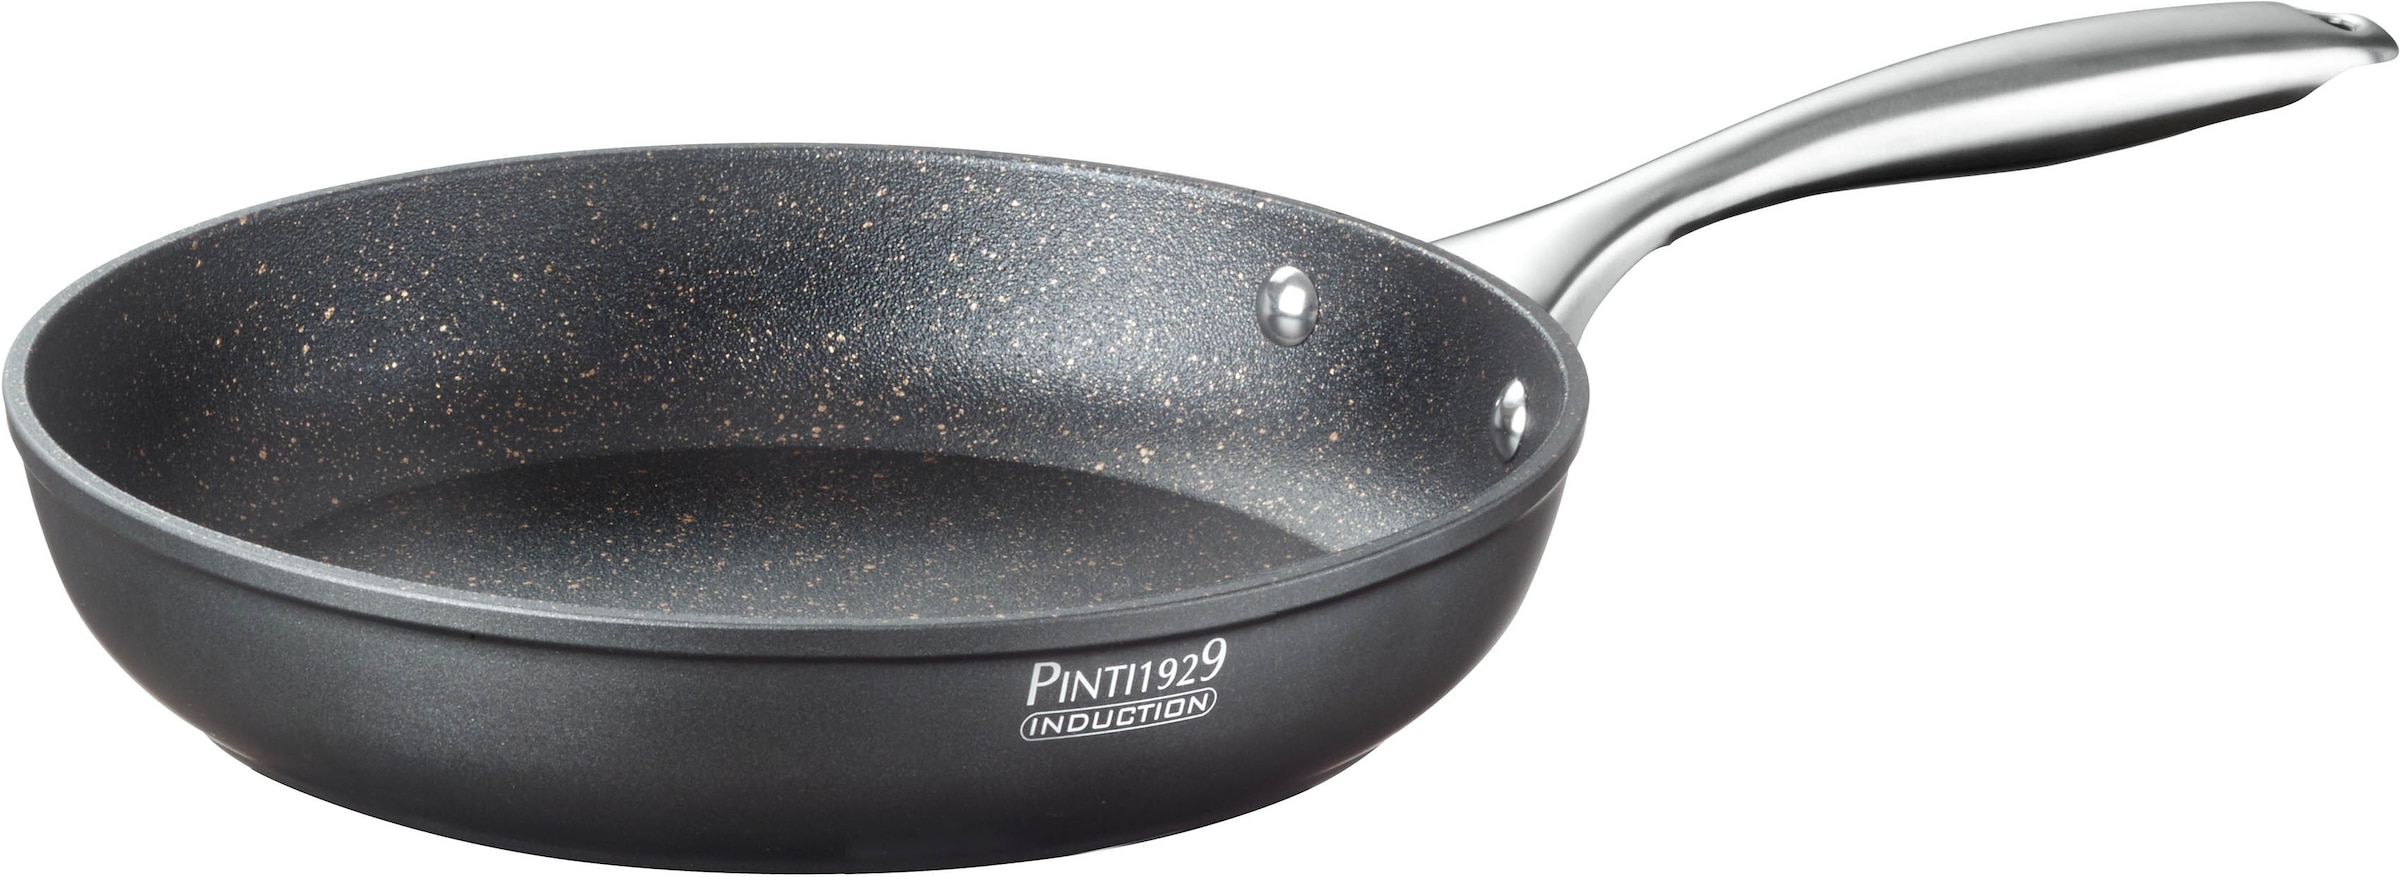 PINTINOX Bratpfanne »Pinti ST1«, Aluminium, 3-lagige Antihaftbeschichtung,  Induktionsgeeignet online bestellen